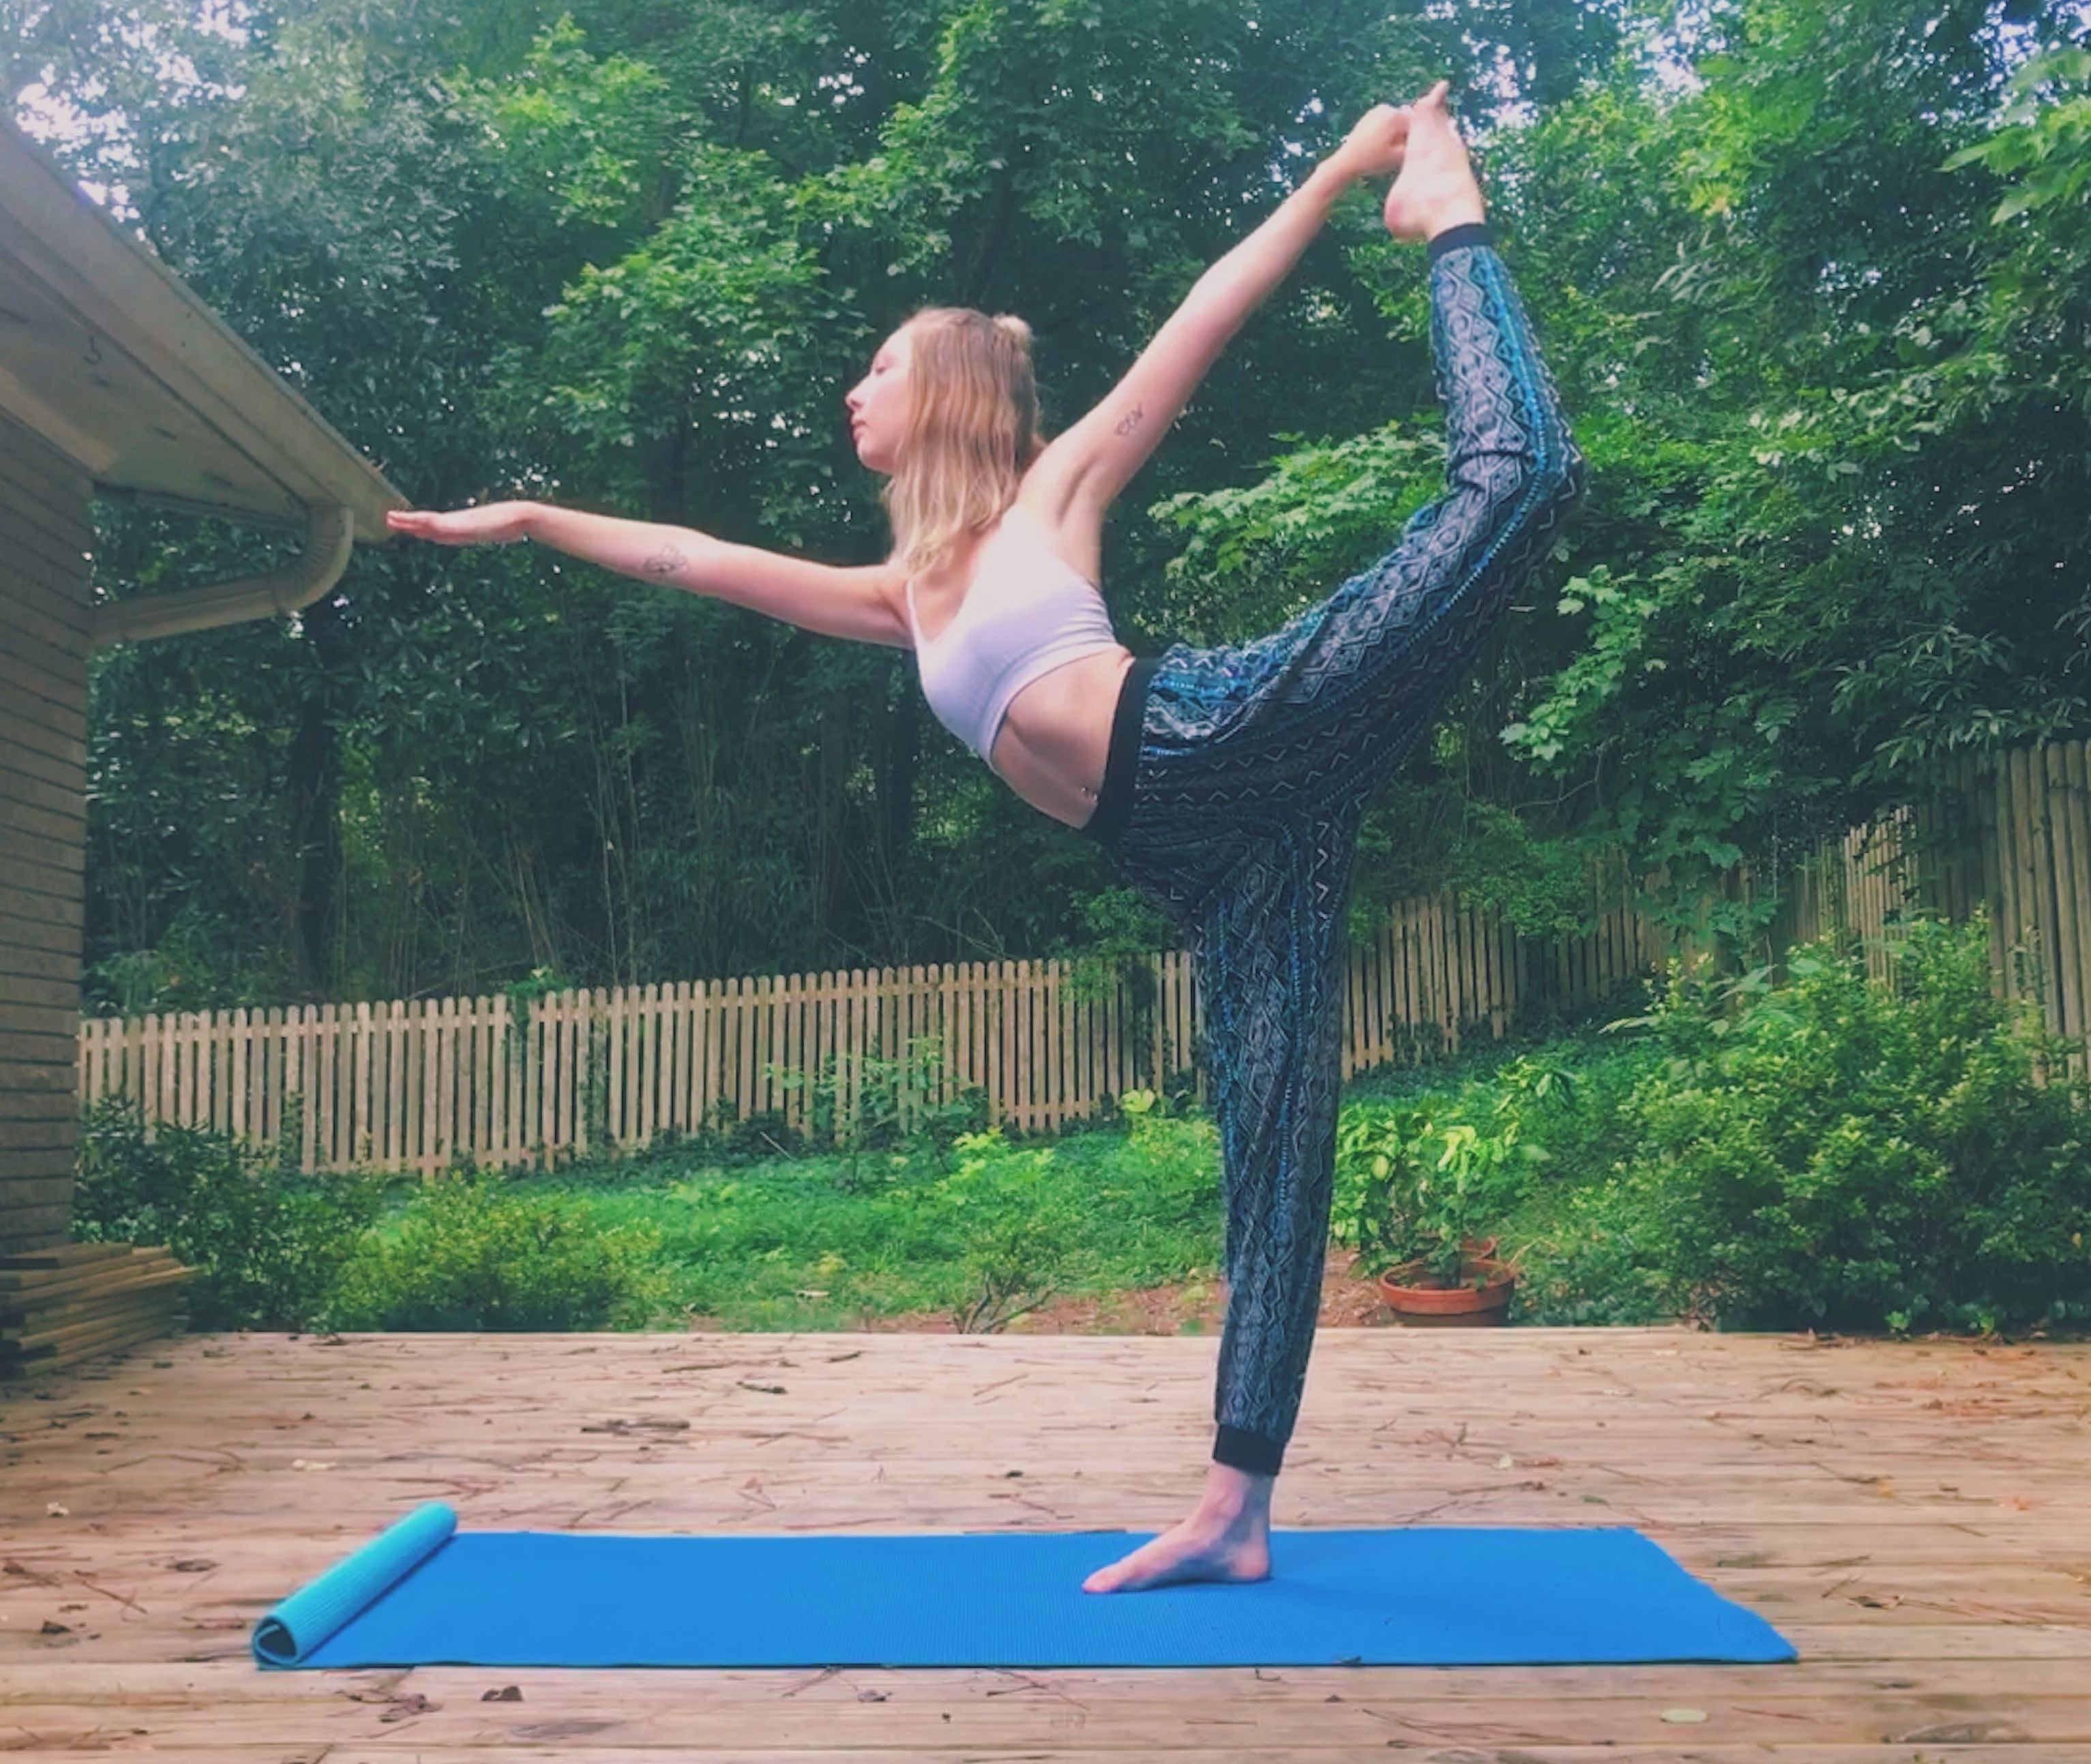 8 Surprising Benefits of Practicing Yoga